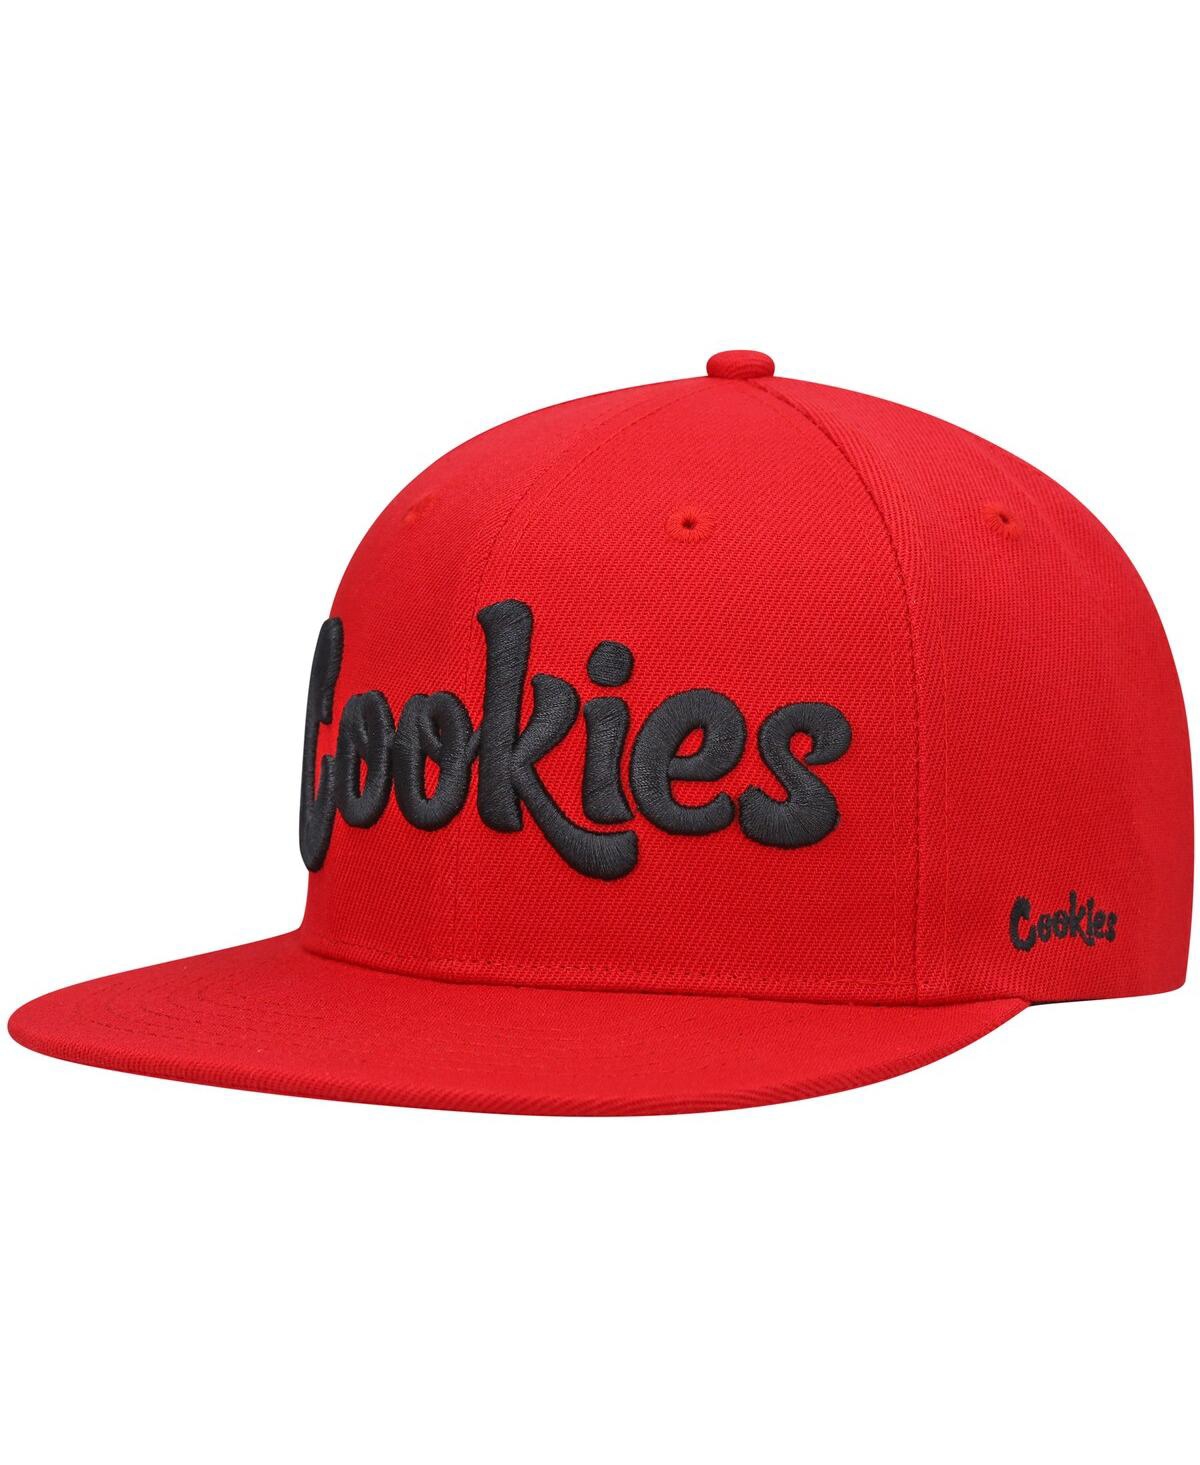 Cookies Men's  Red Original Mint Solid Logo Snapback Hat